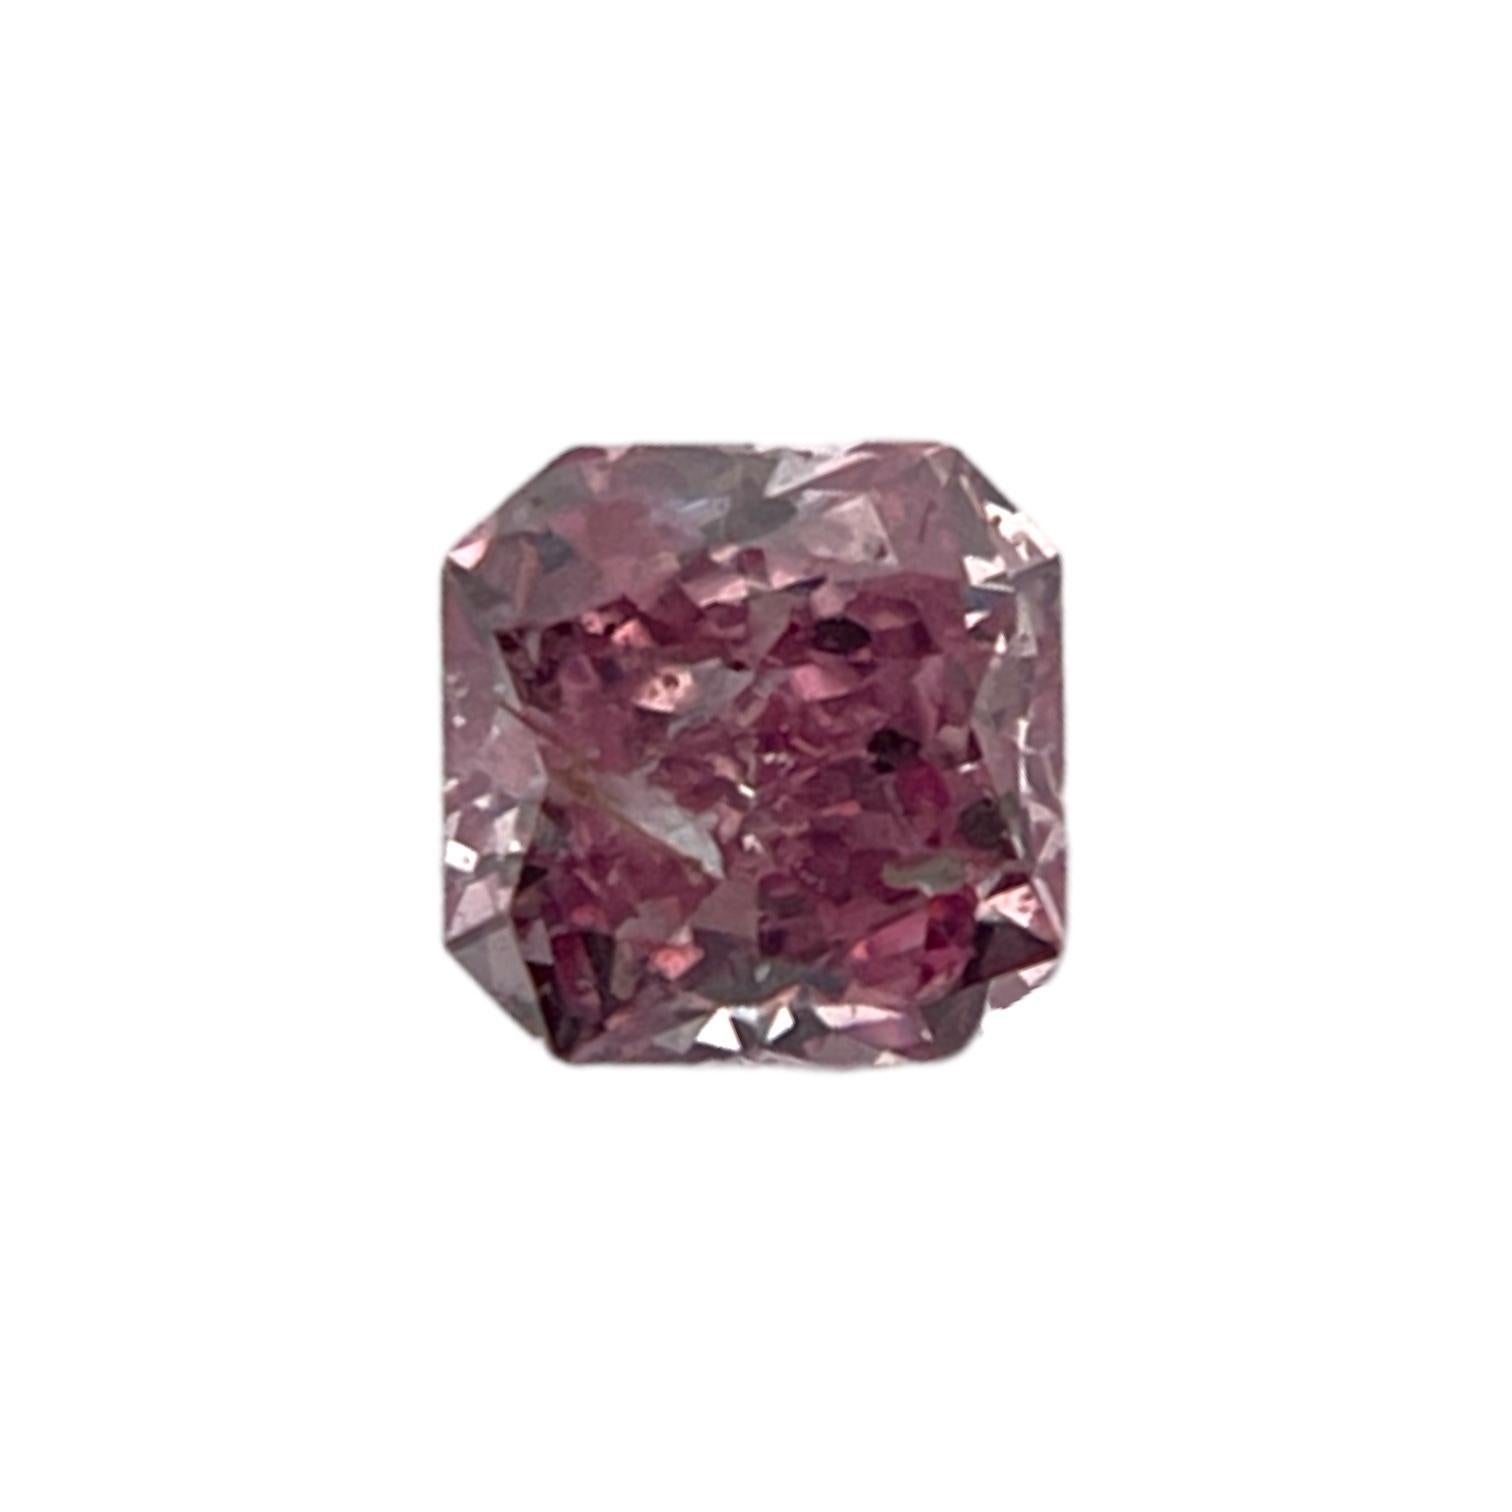 ITEM DESCRIPTION

ID #: NYC57749
Stone Shape: Radiant
Diamond Weight: 0.18Carat
Fancy Color: Purplish Pink
Cut:	Brilliant
Measurements: 3.33 x 3.33 x 1.91 mm
Symmetry: Excellent
Polish: Excellent
Fluorescence: None
Certifying Lab: GIA
GIA